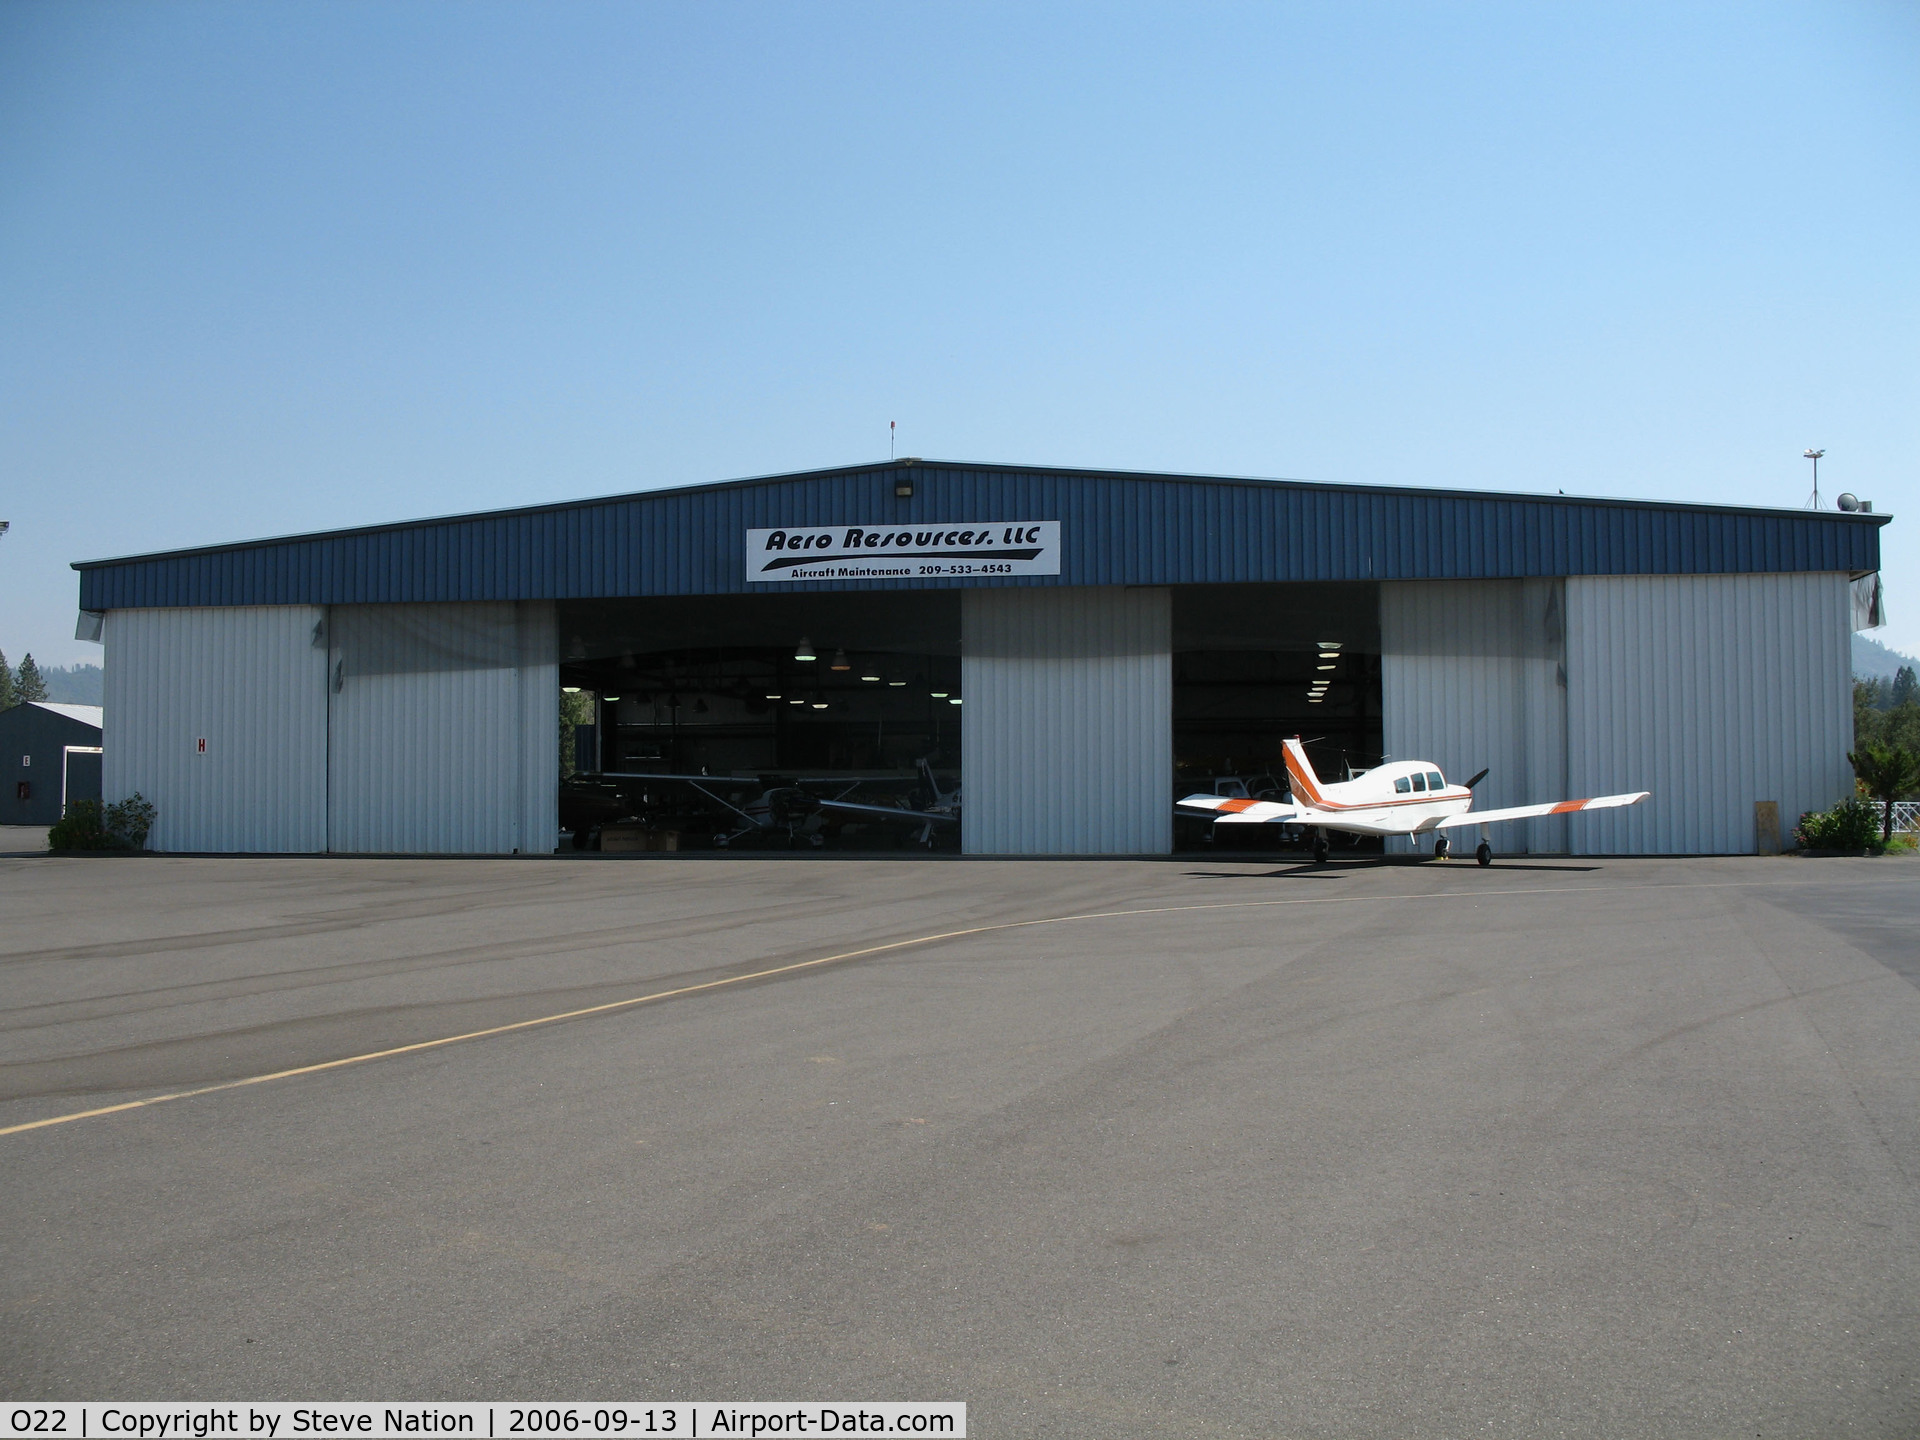 Columbia Airport (O22) - Aero Resources LLC hangar @ Columbia Airport, CA